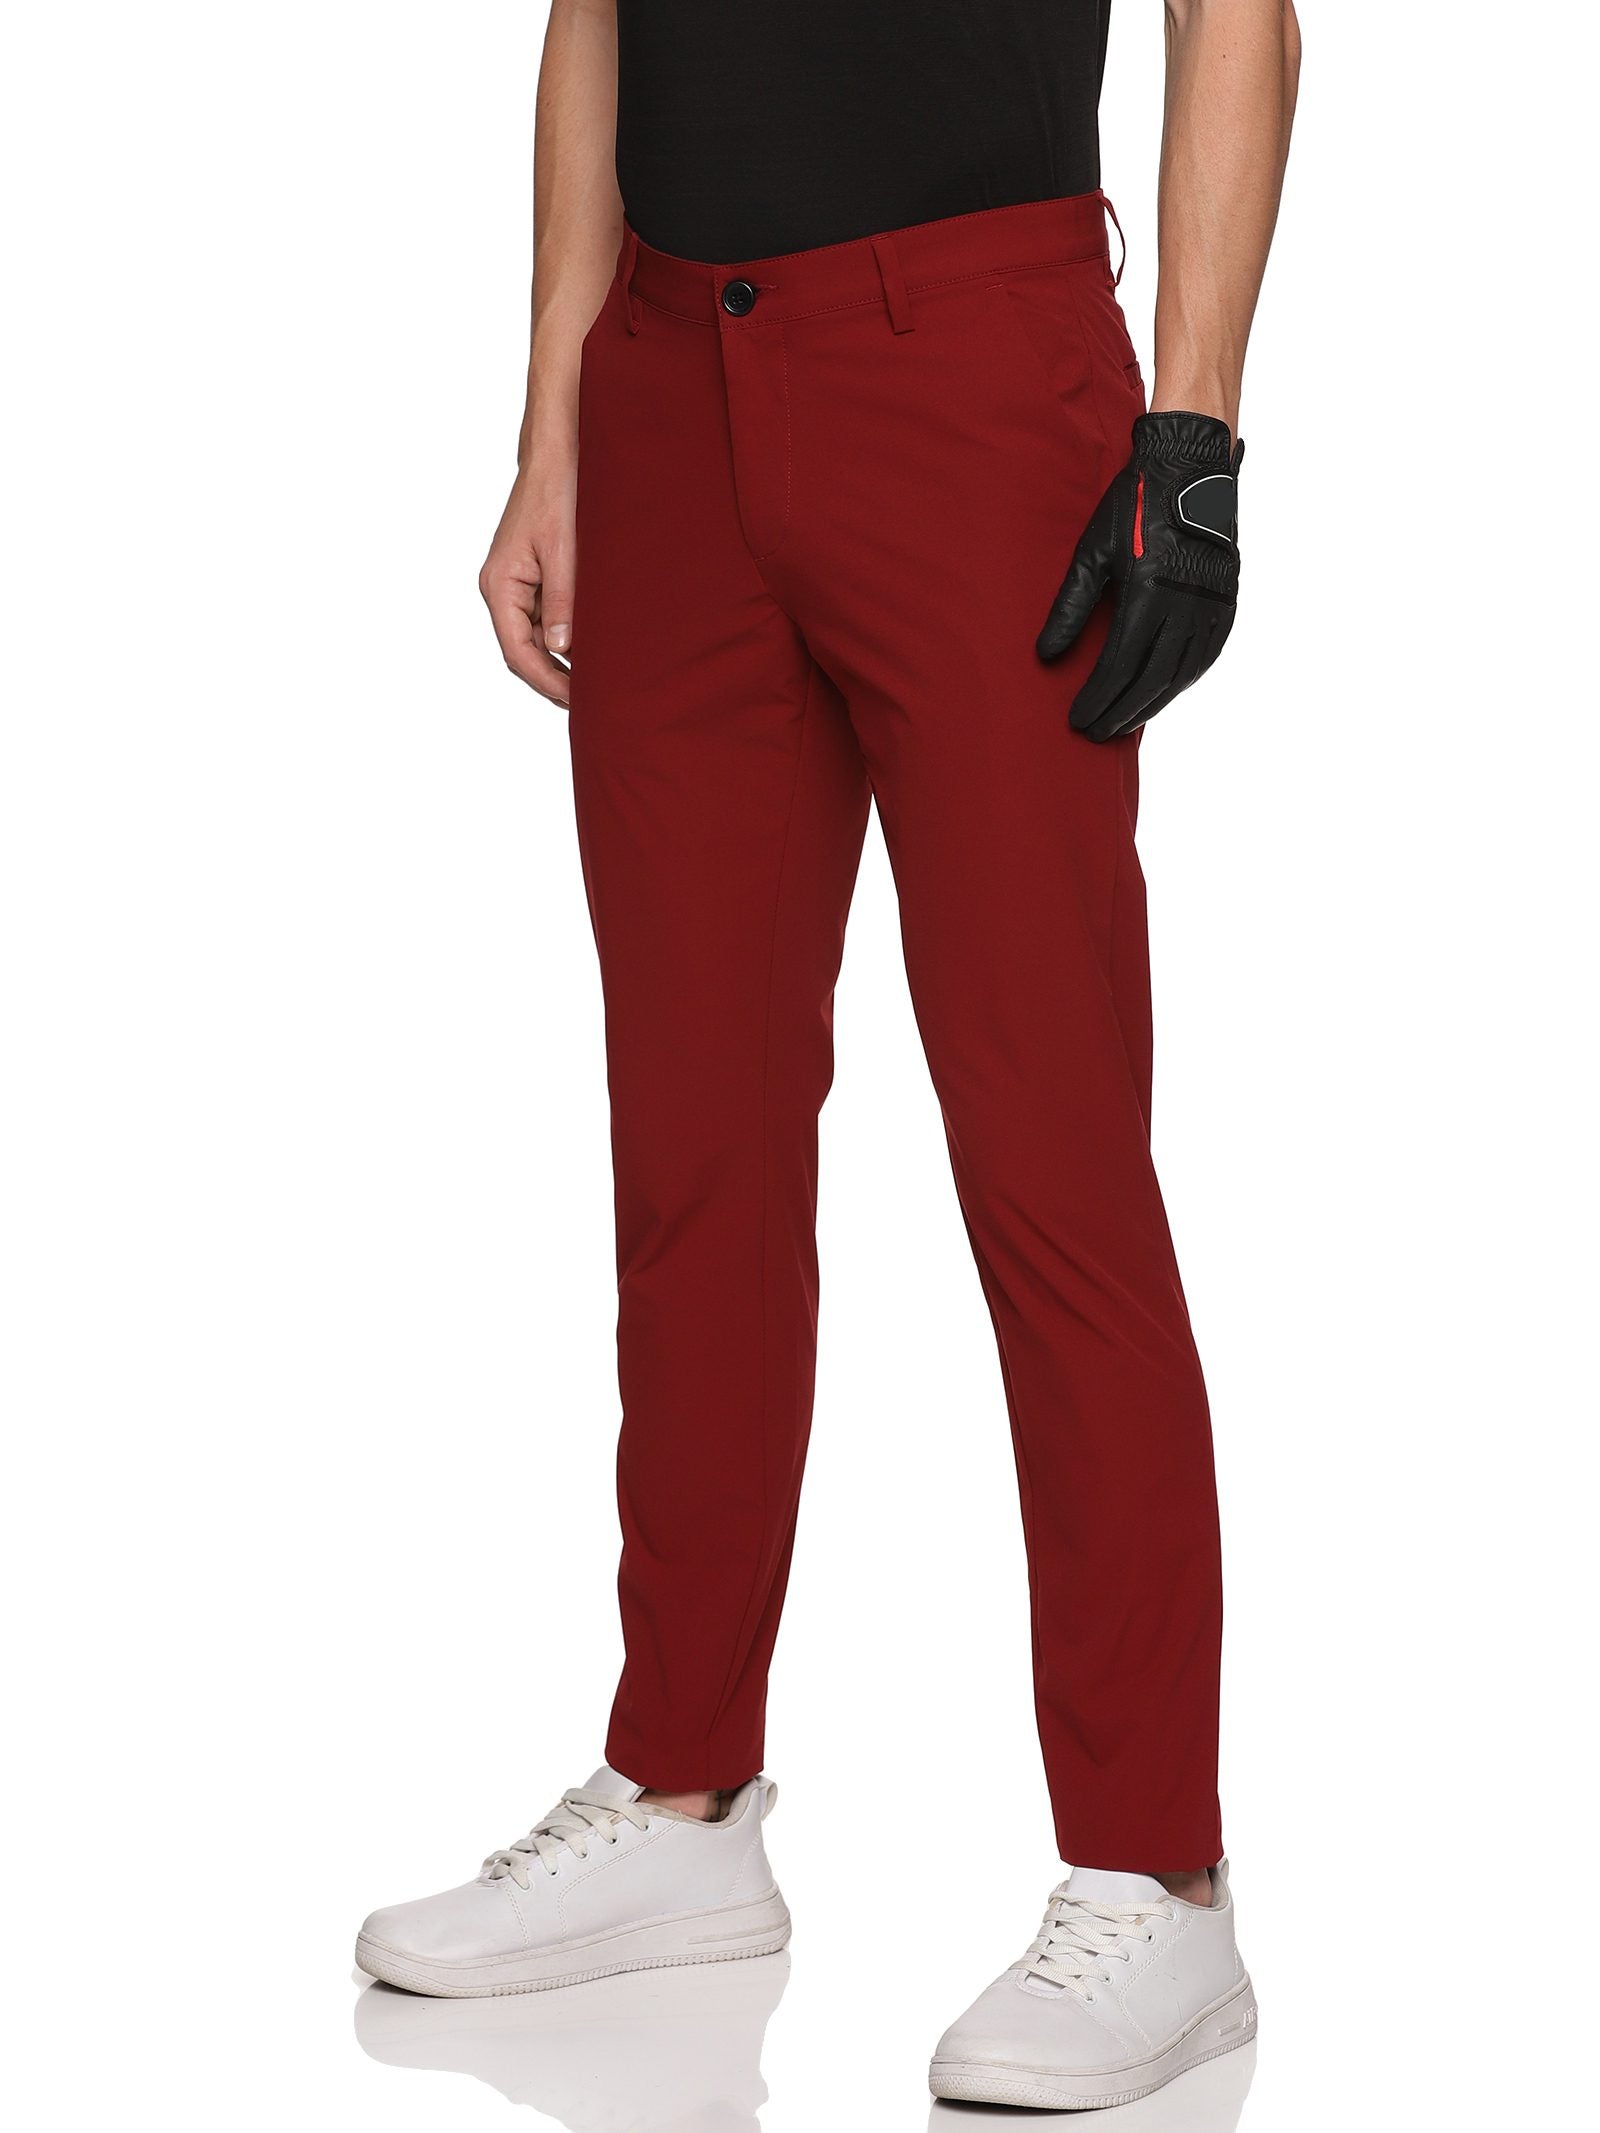 Styzen Boy’s Active Golf Trousers (Flexi-Waist)